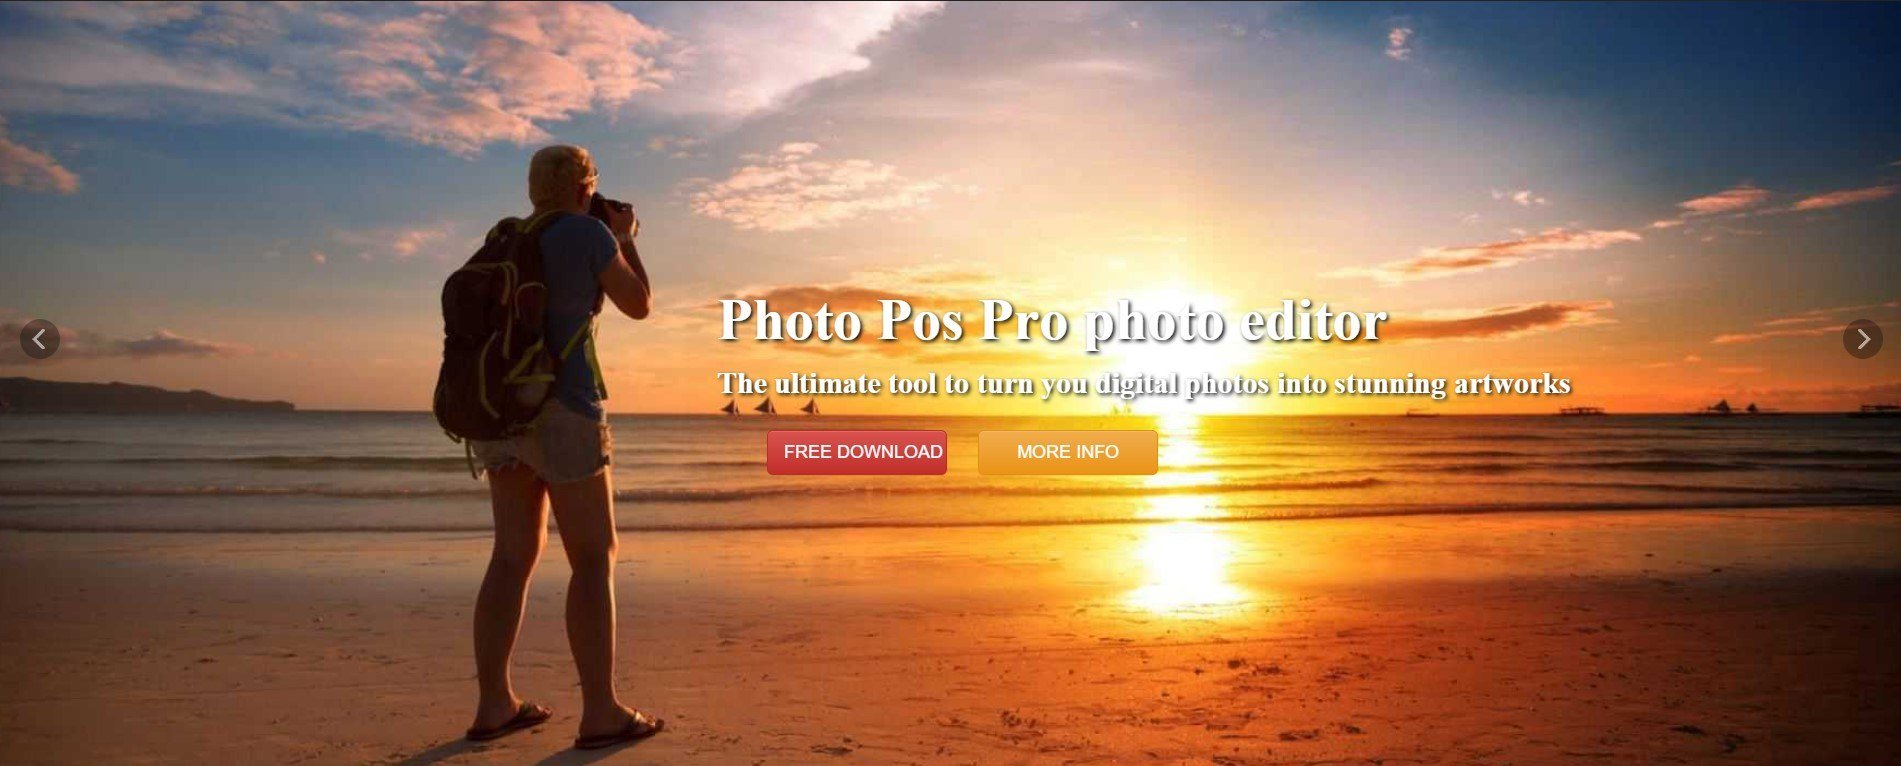 photo pos pro home page